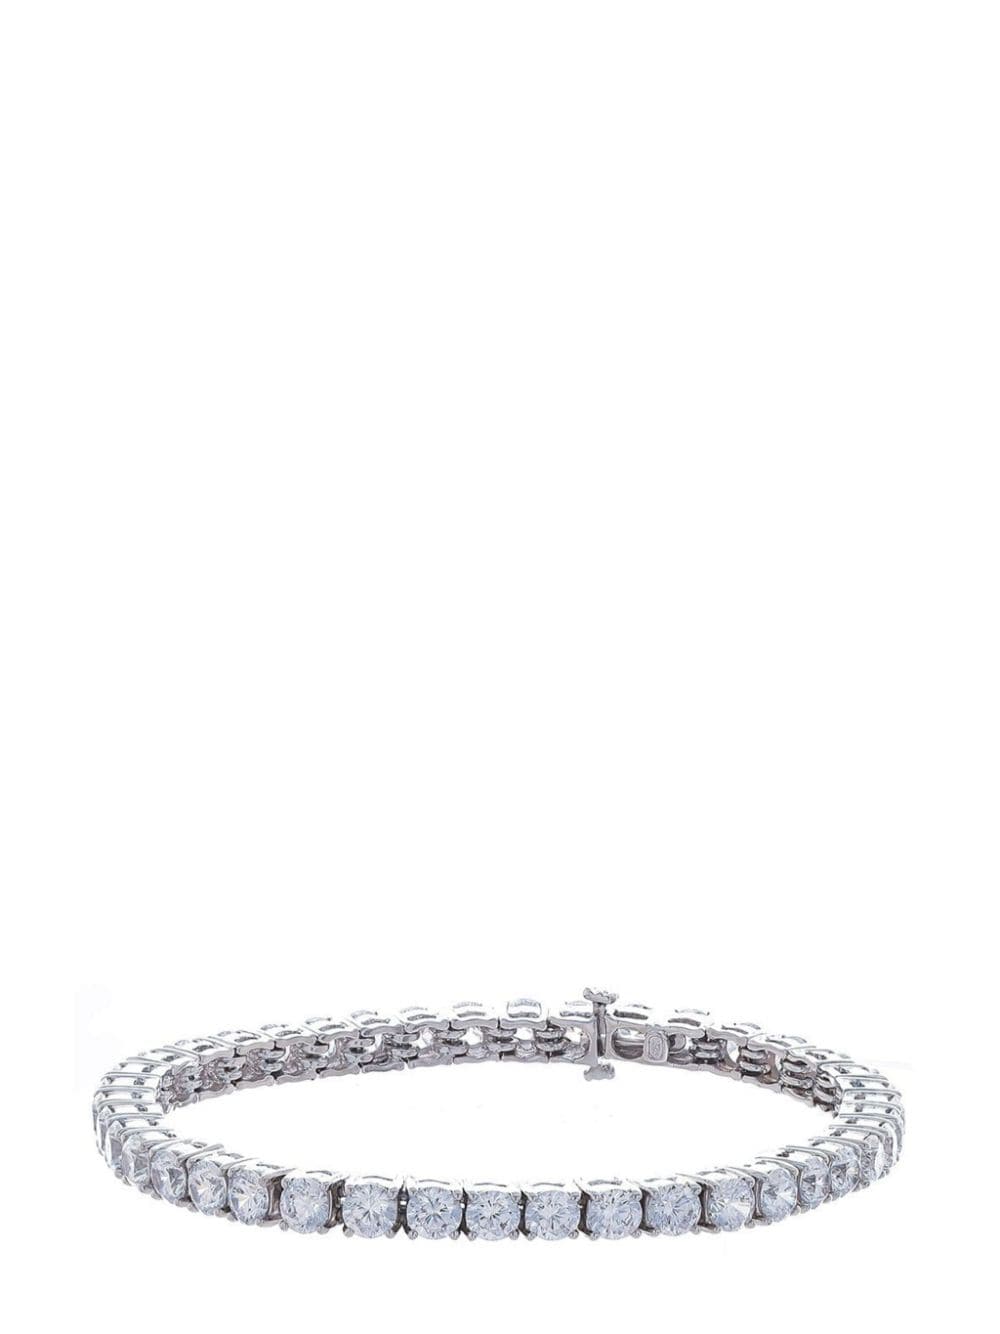 Fantasia By Deserio Embellished Tennis Bracelet In Silver